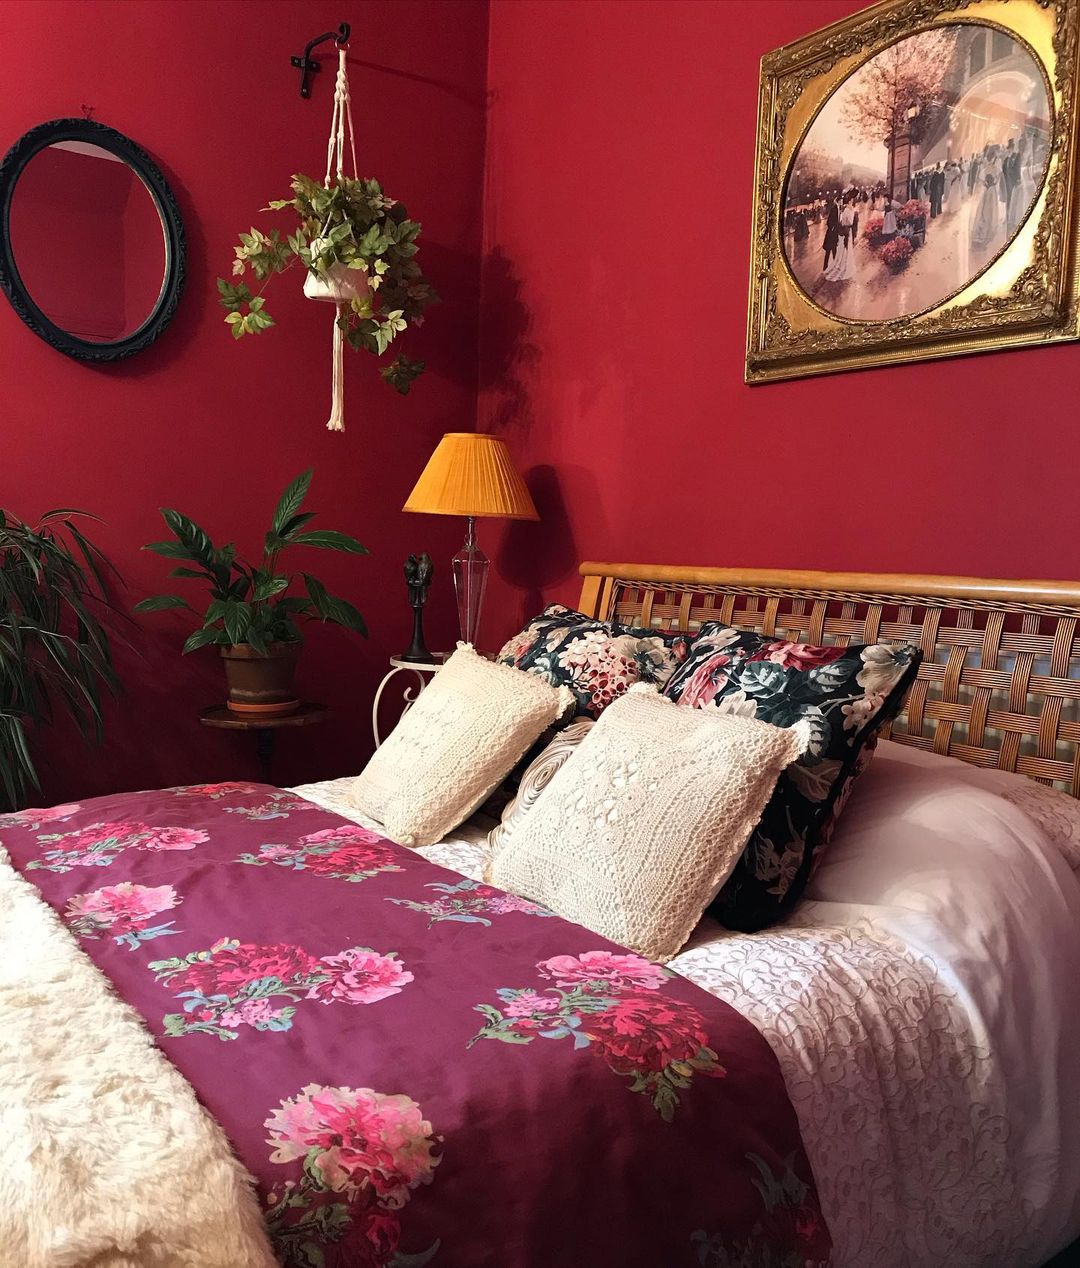 Cozy Floral Red Bedroom